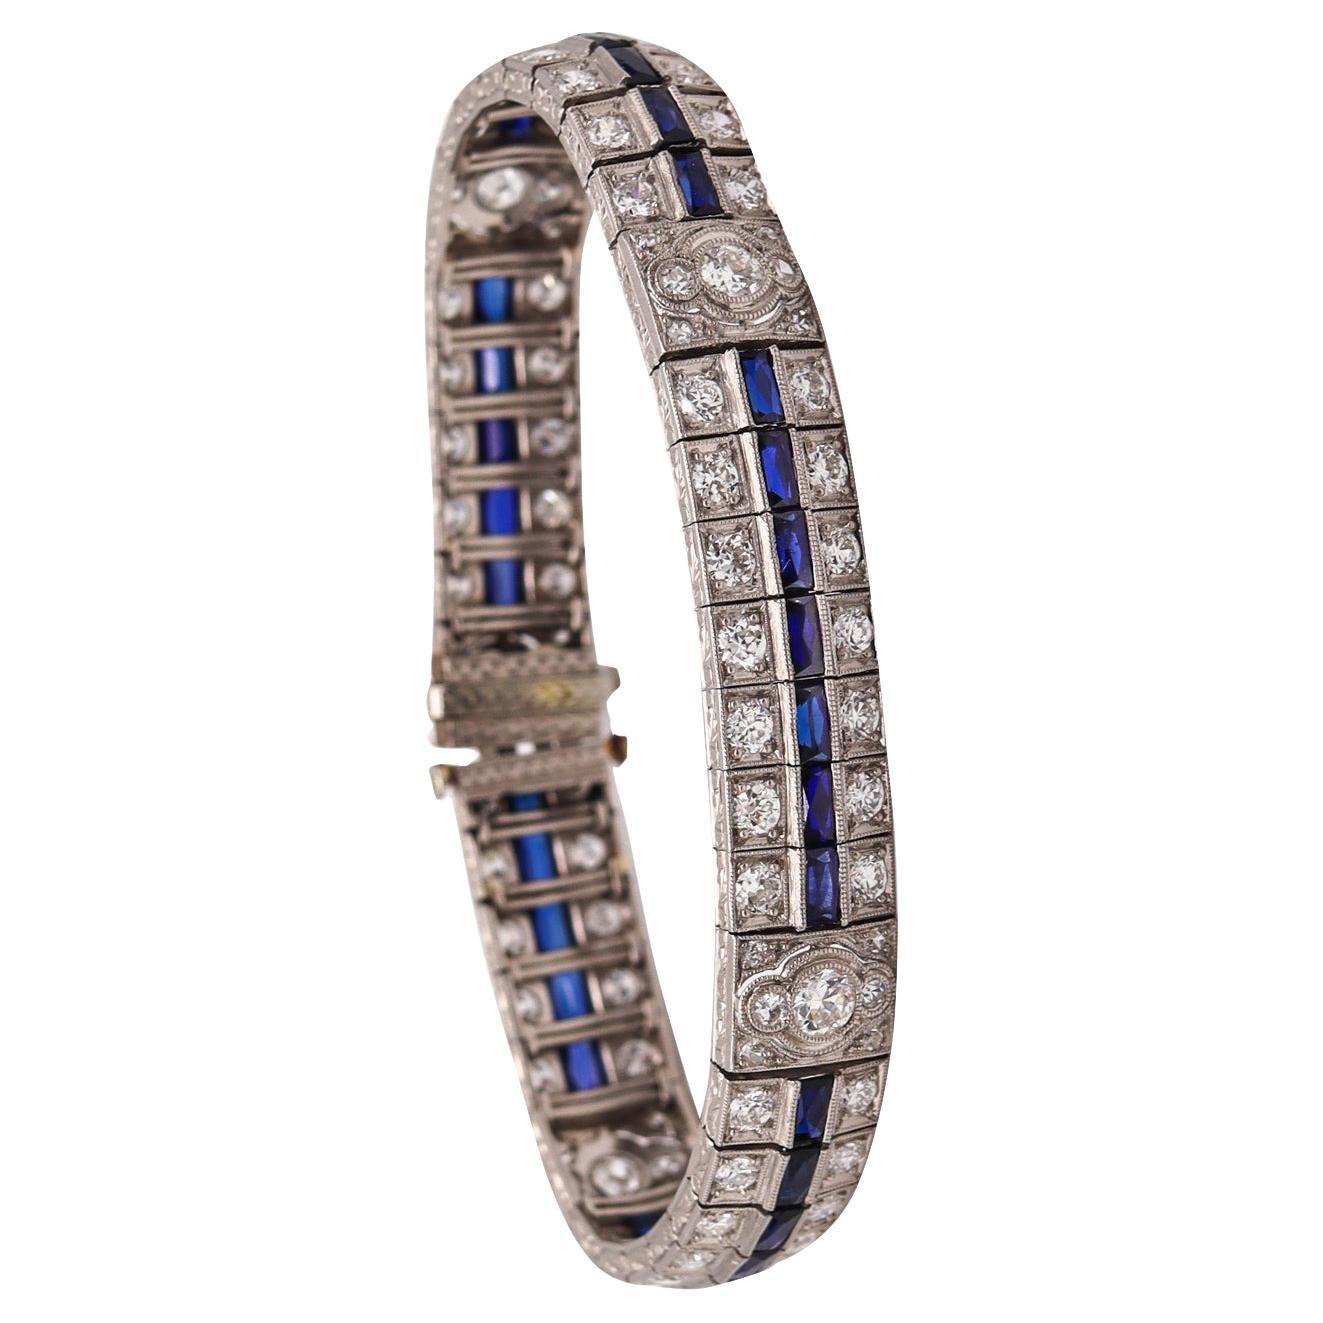 Art Deco 1930 Bracelet in Platinum with 12.33 Ctw in Diamonds and Sapphires